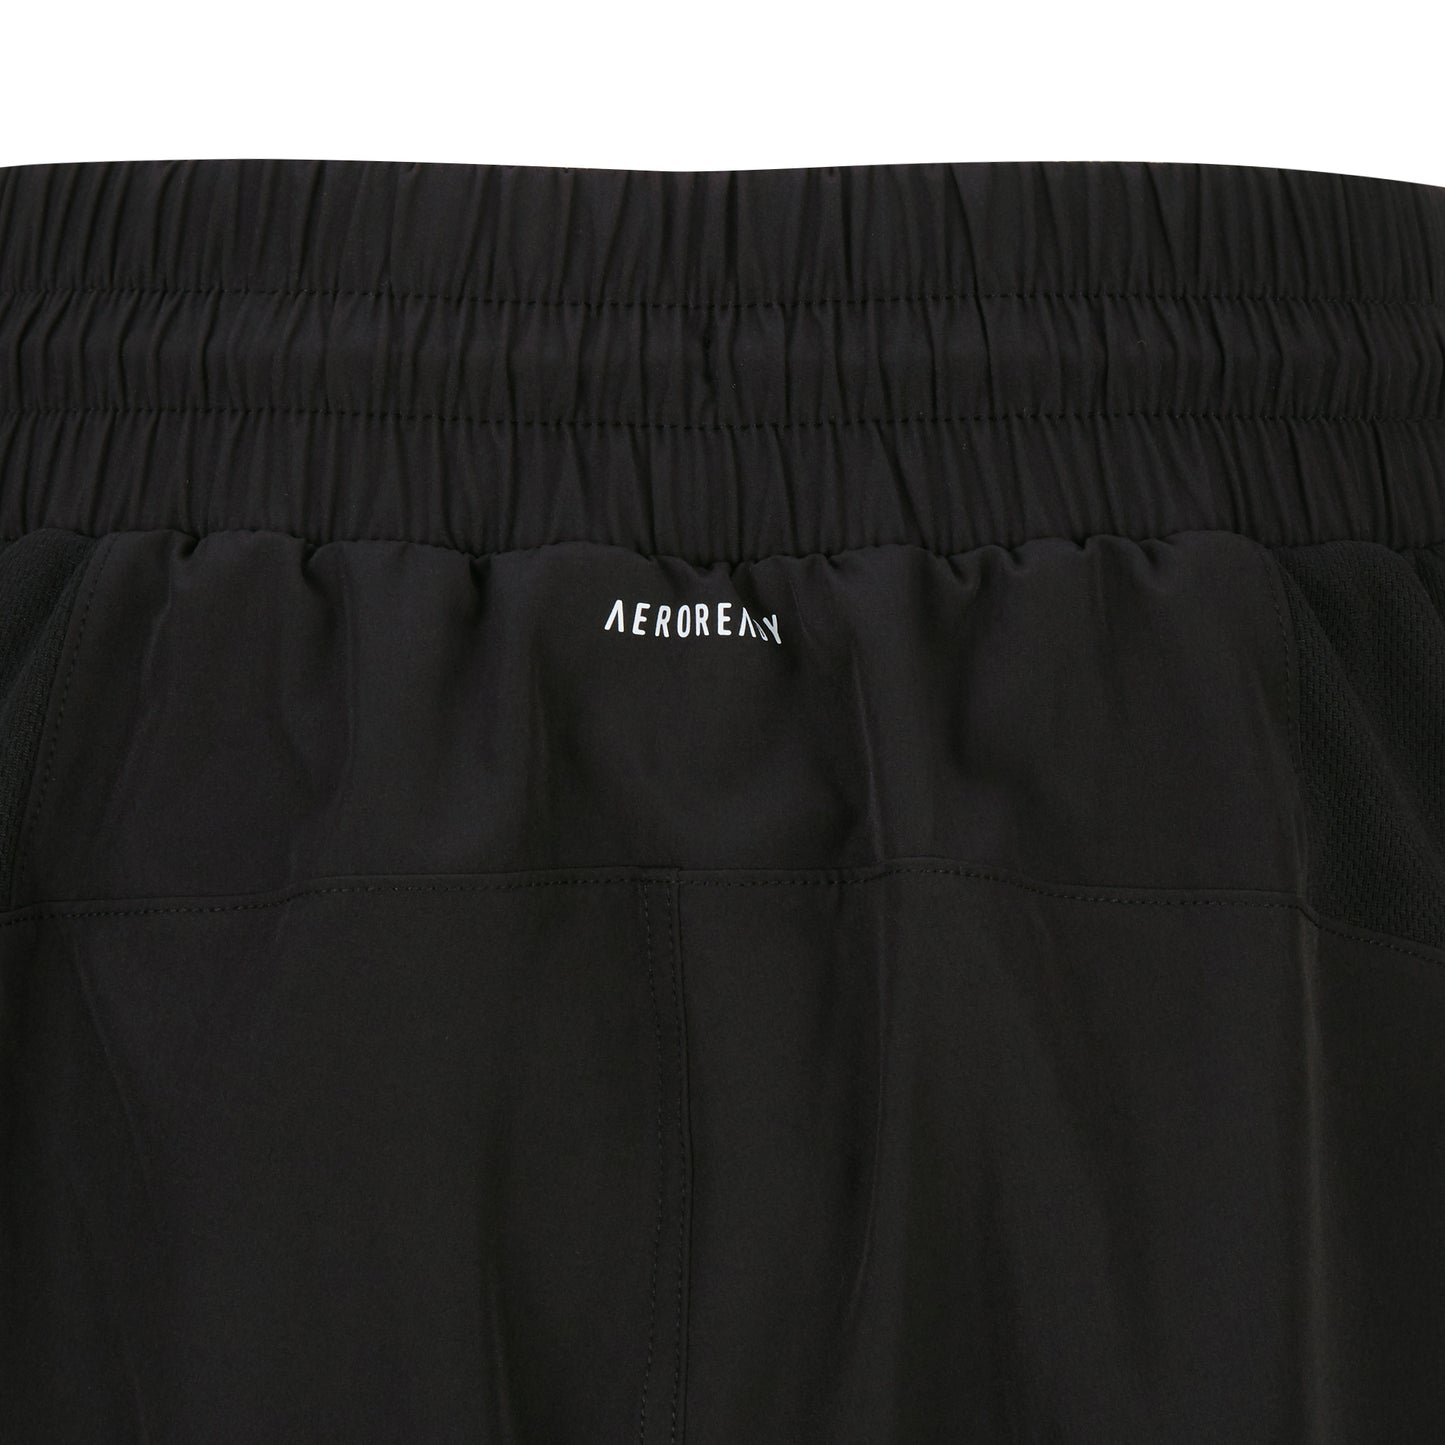 Bxwtsh01 Adidas Boxwear Tech Shorts Black 05